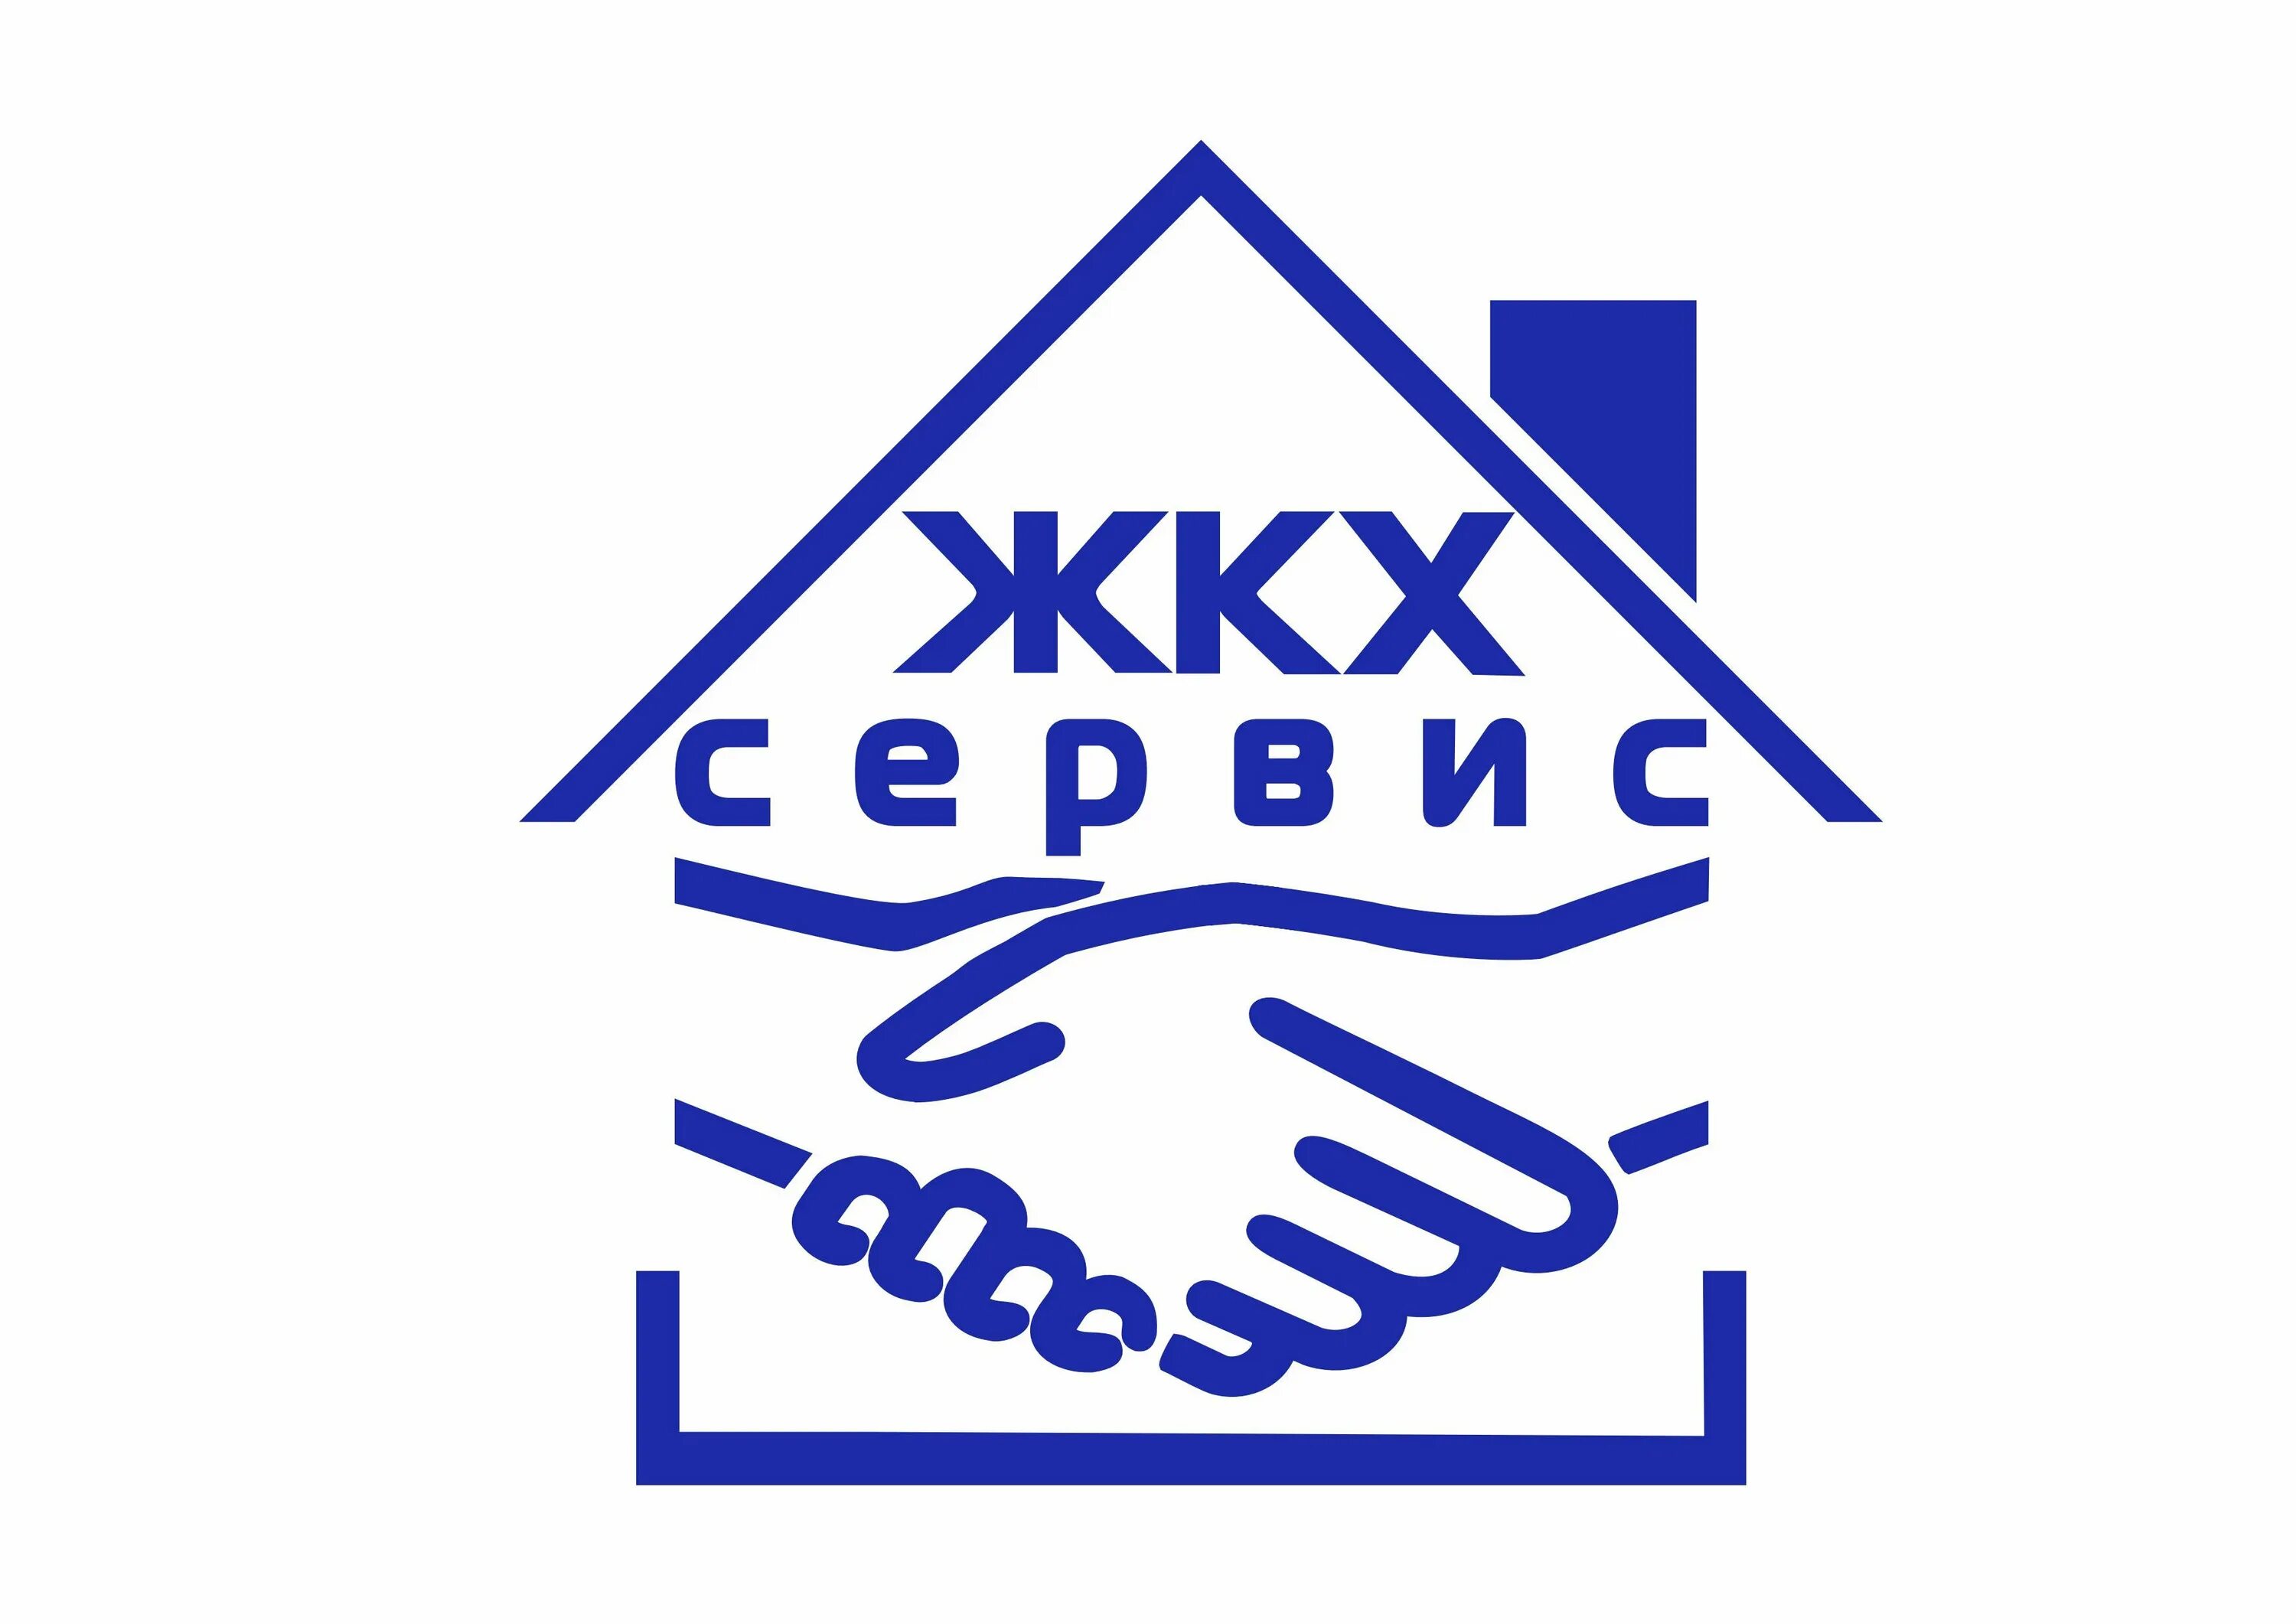 Эмблема ЖКХ. ЖКХ сервис. Логотип для предприятия ЖКХ. Логотип управляющей компании ЖКХ.